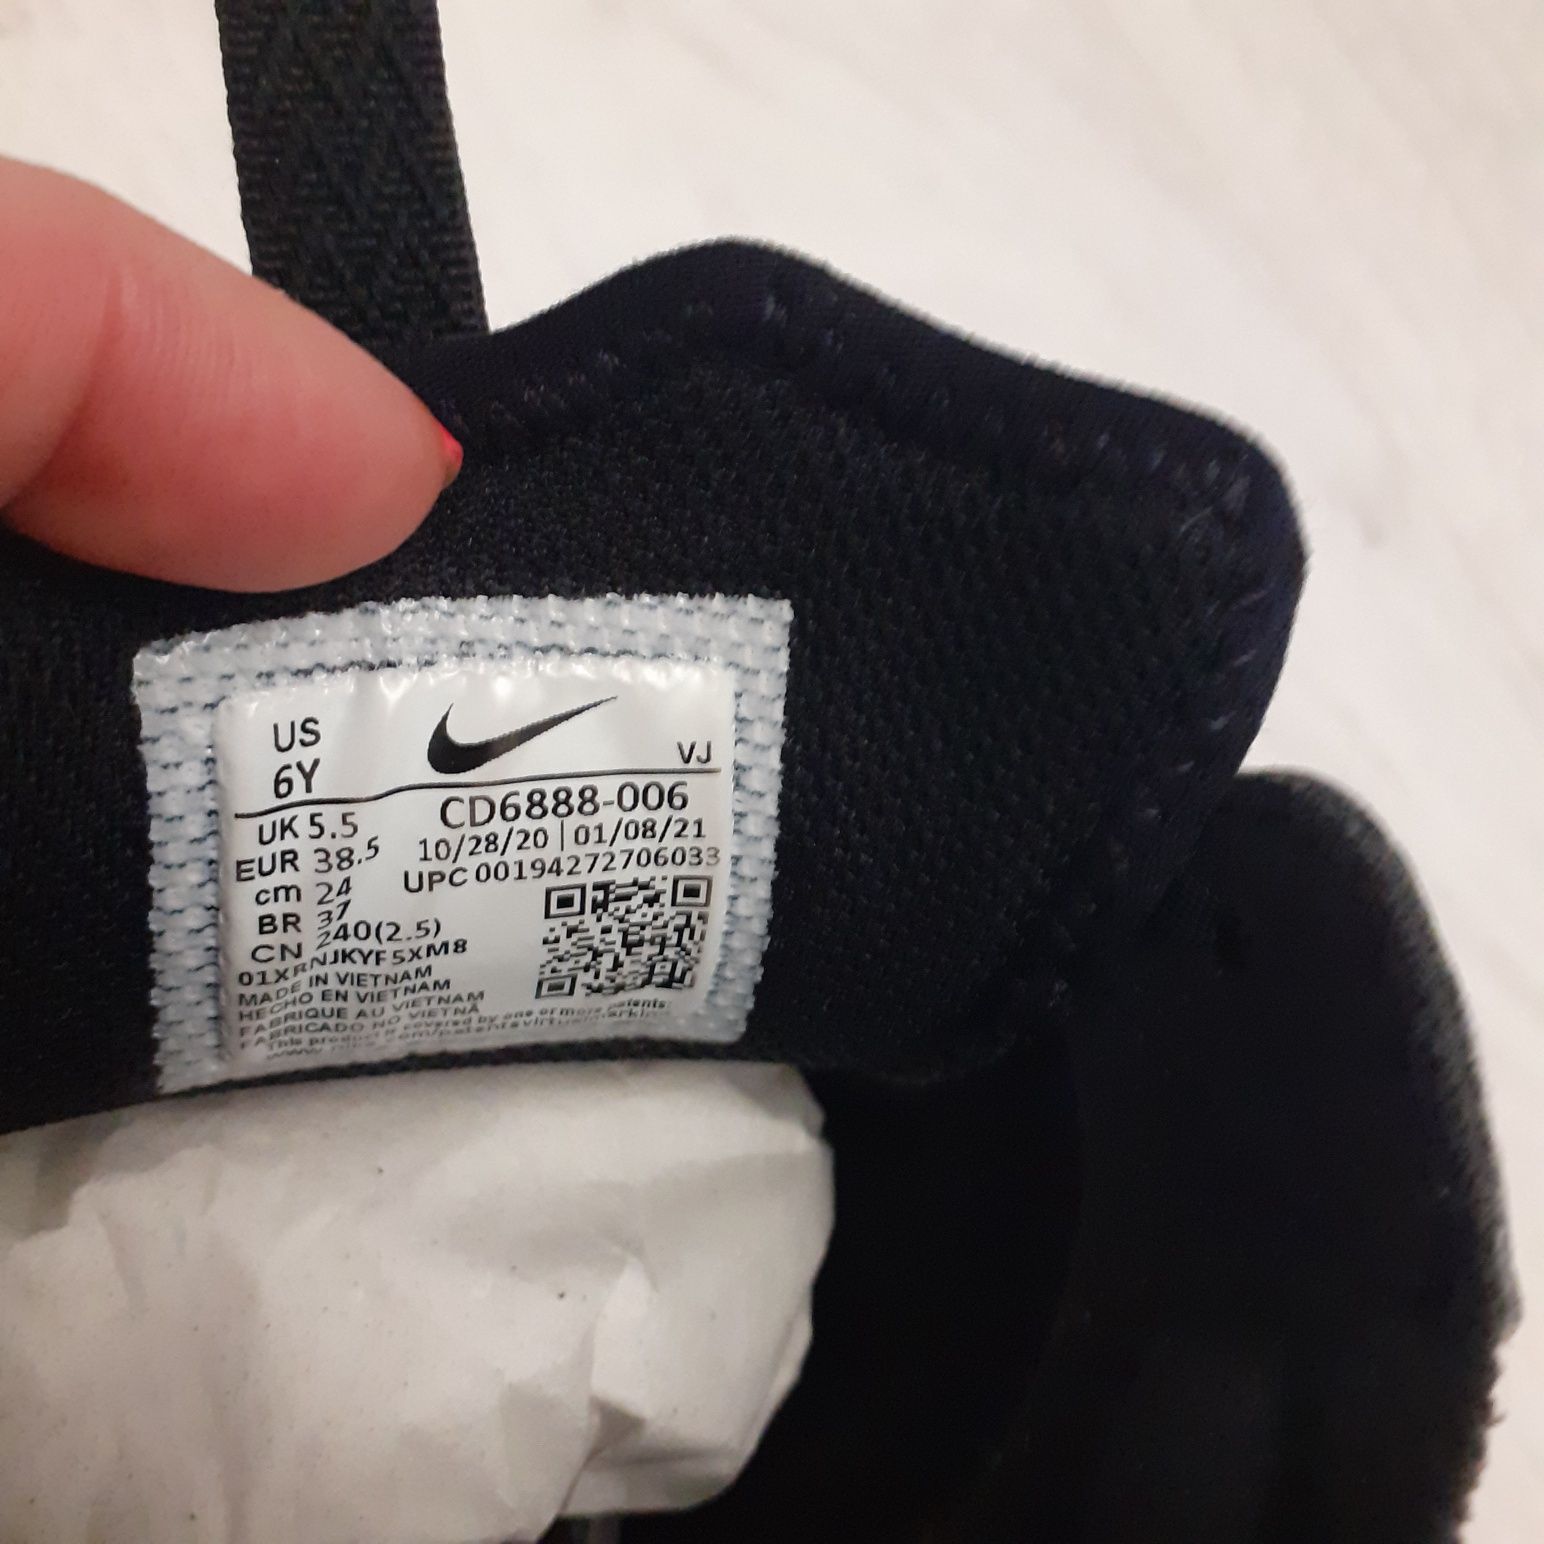 Nike React Vision 38.5 rozmiar